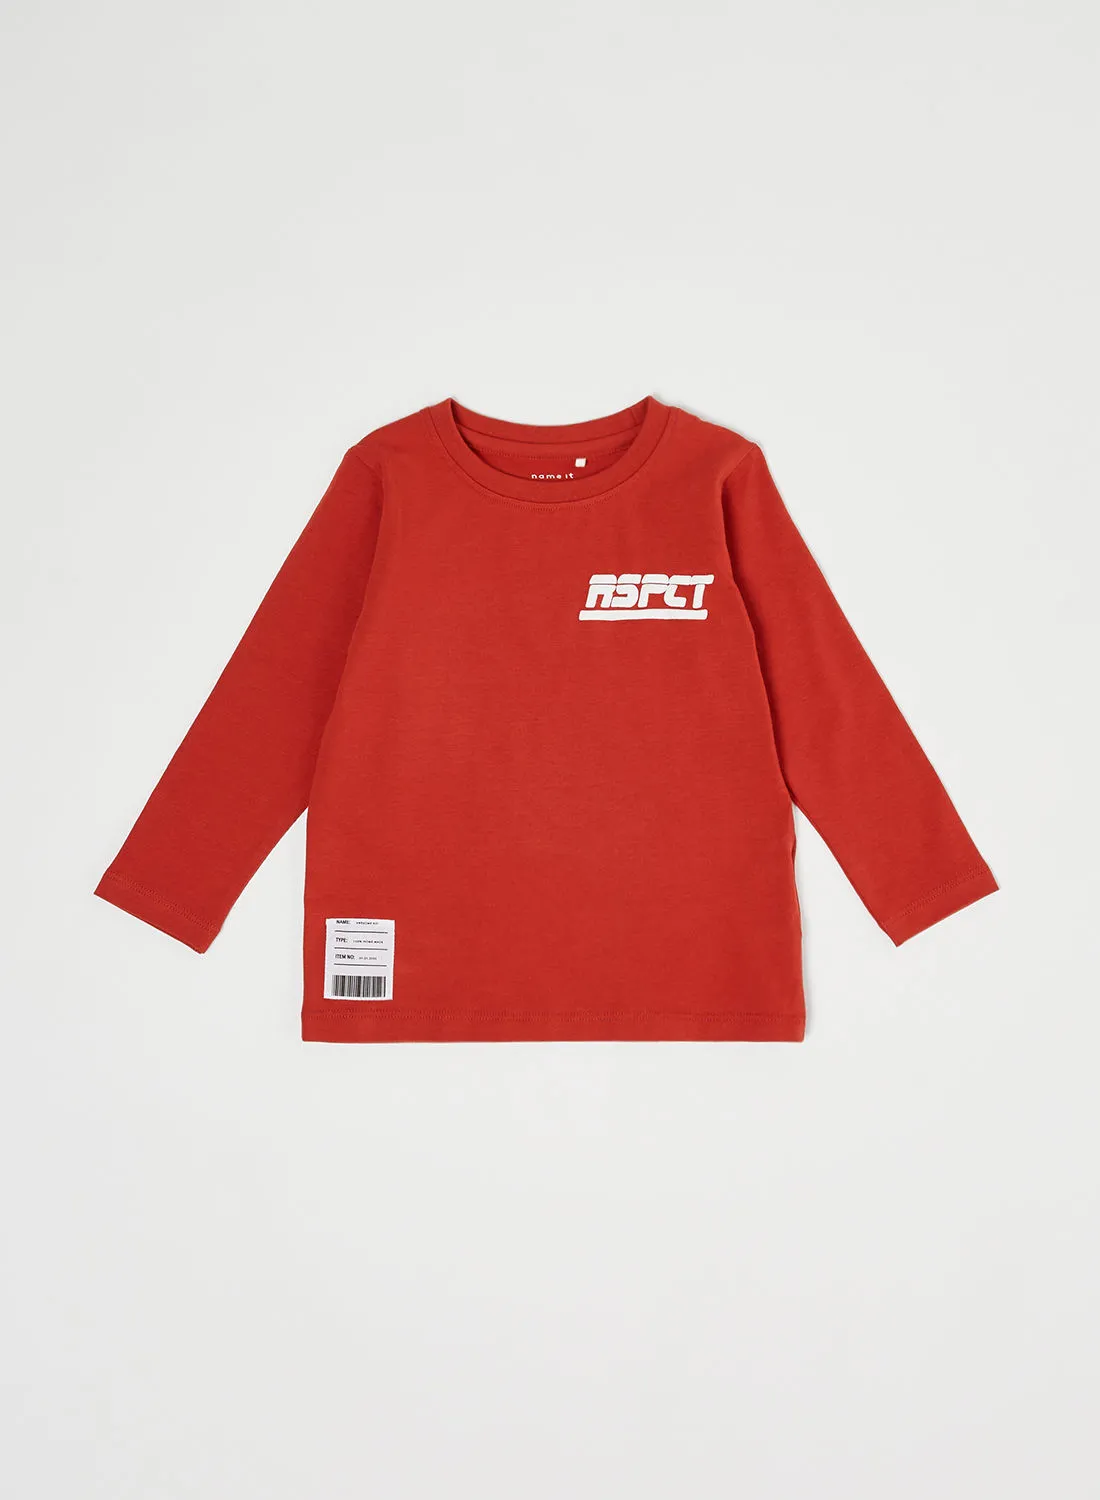 NAME IT Baby/Kids Long Sleeve T-Shirt Ketchup